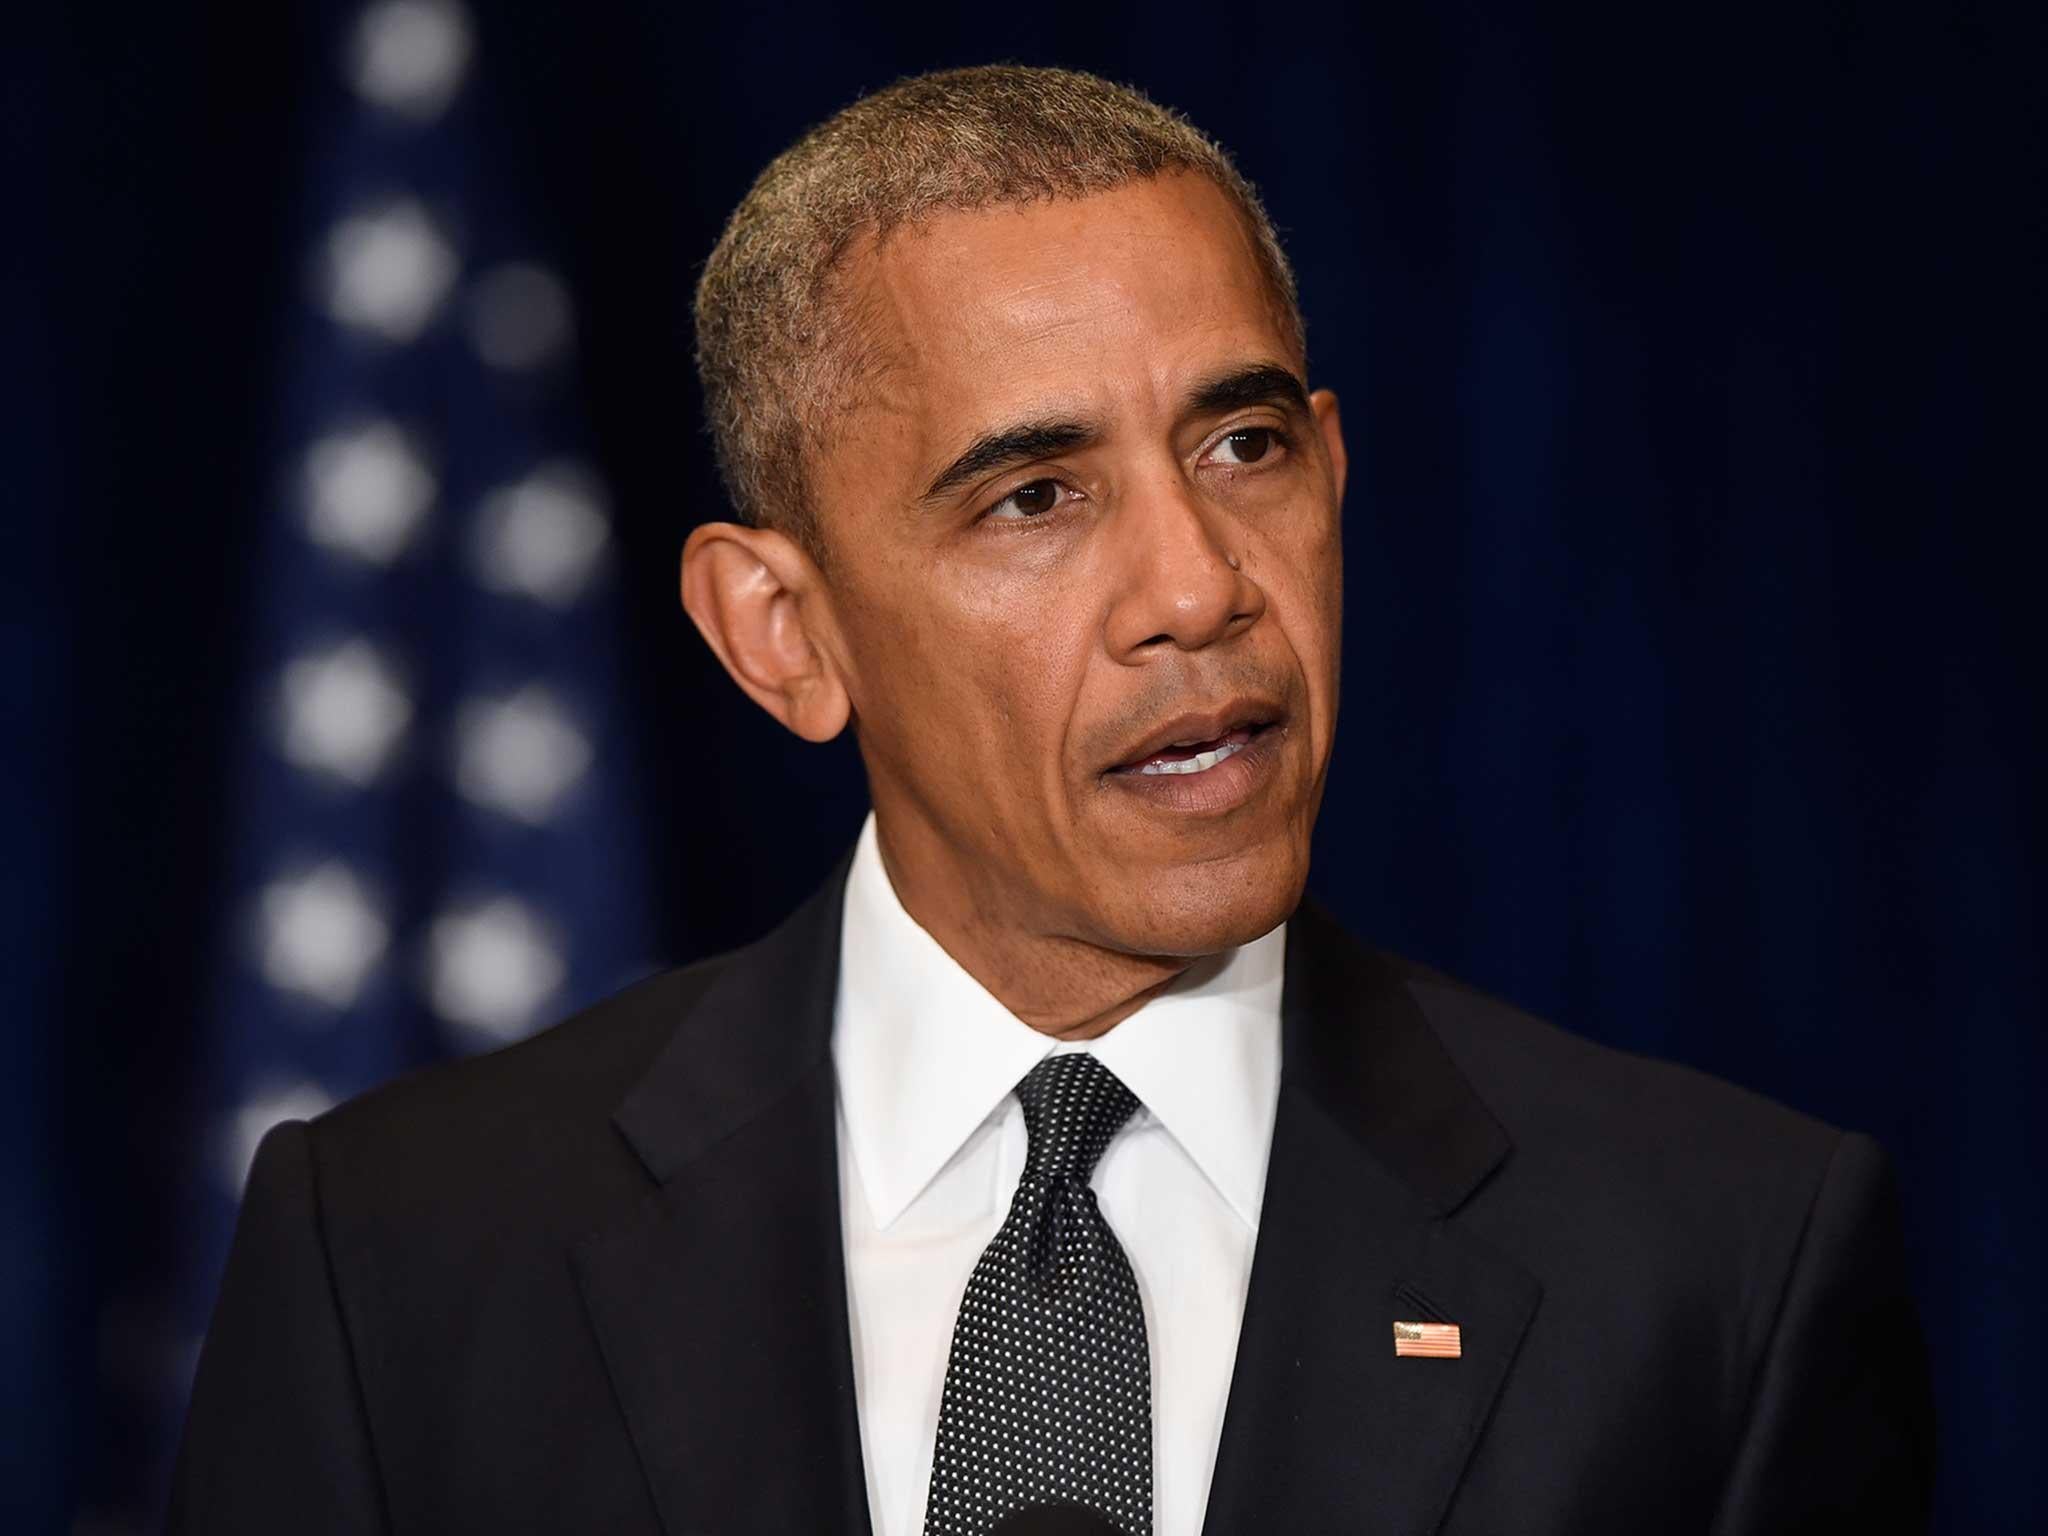 President Barack Obama addresses the overnight shootings of police officers